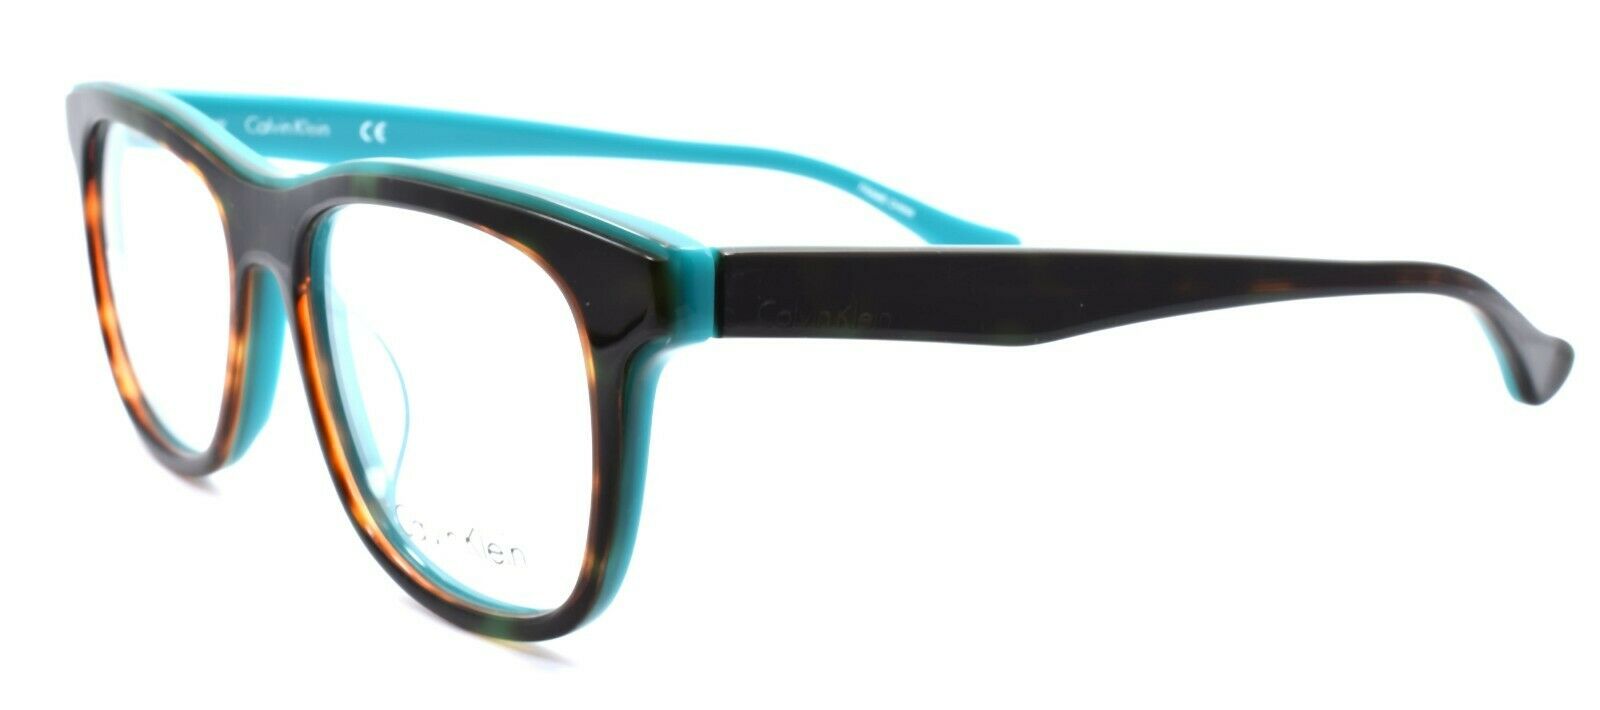 1-Calvin Klein CK5933 217 Unisex Eyeglasses Frames 51-16-140 Green Tortoise-750779100547-IKSpecs